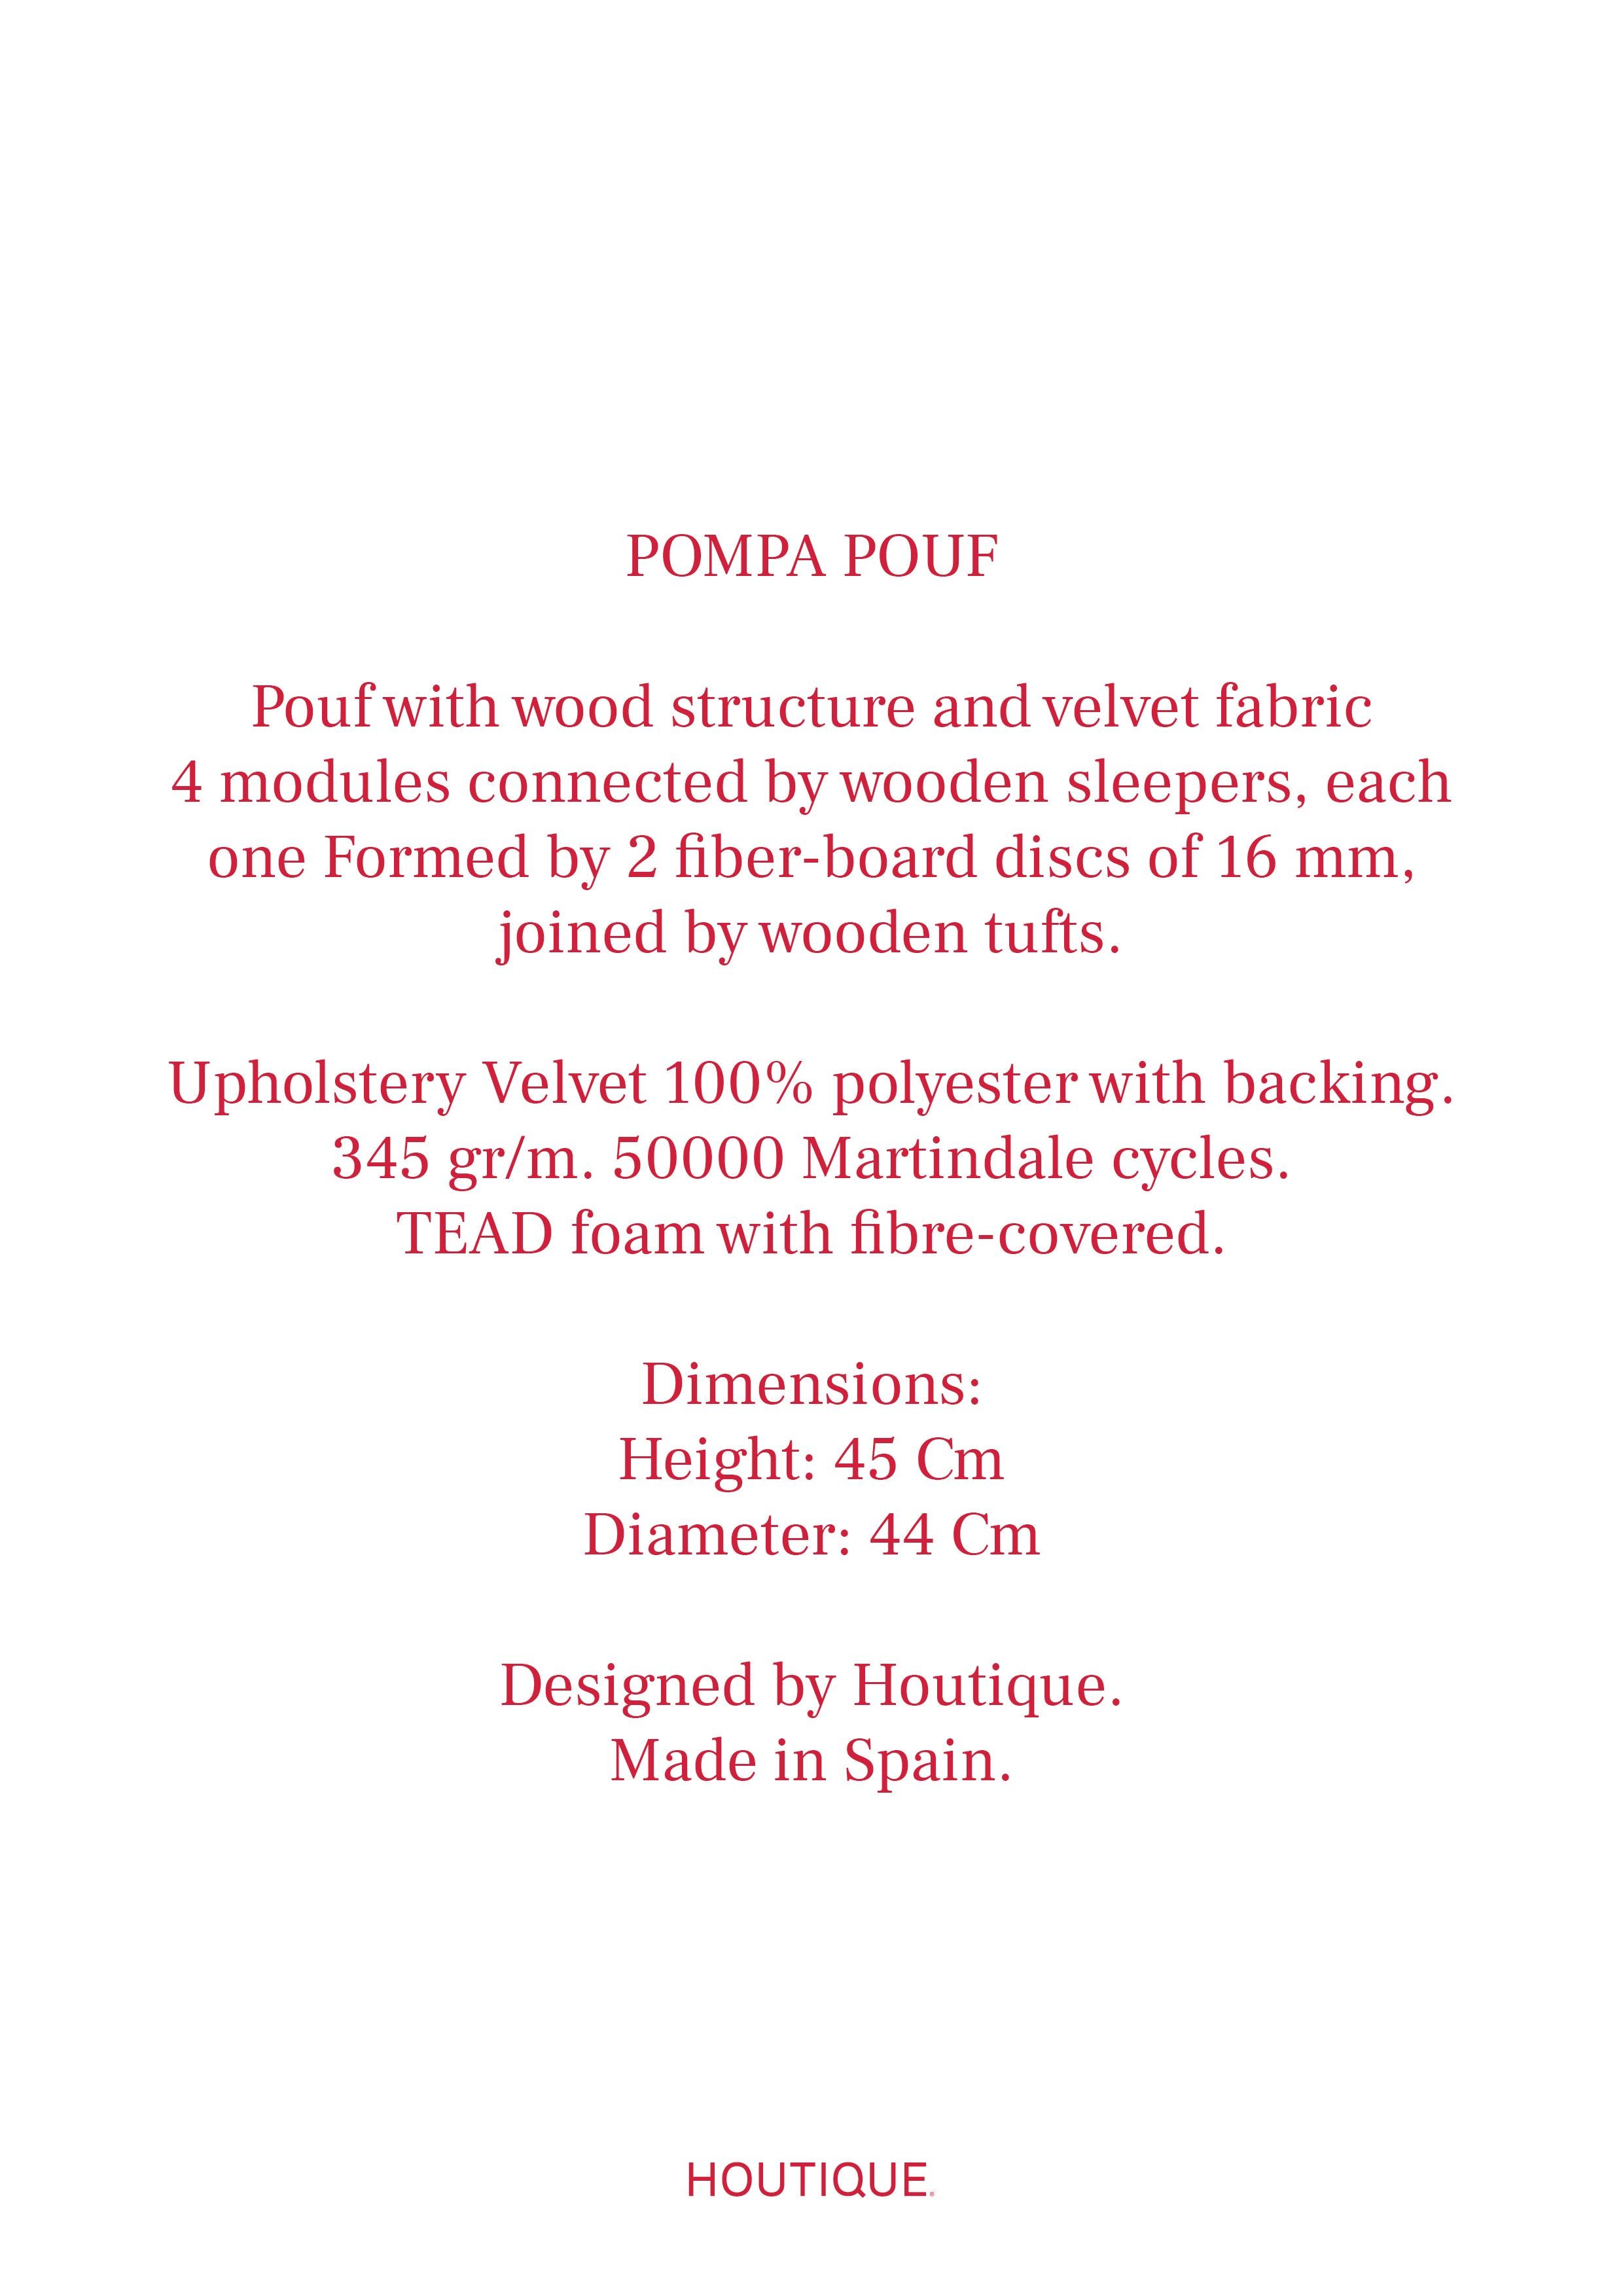 Spanish Pompa Pouf by Houtique, Purple For Sale